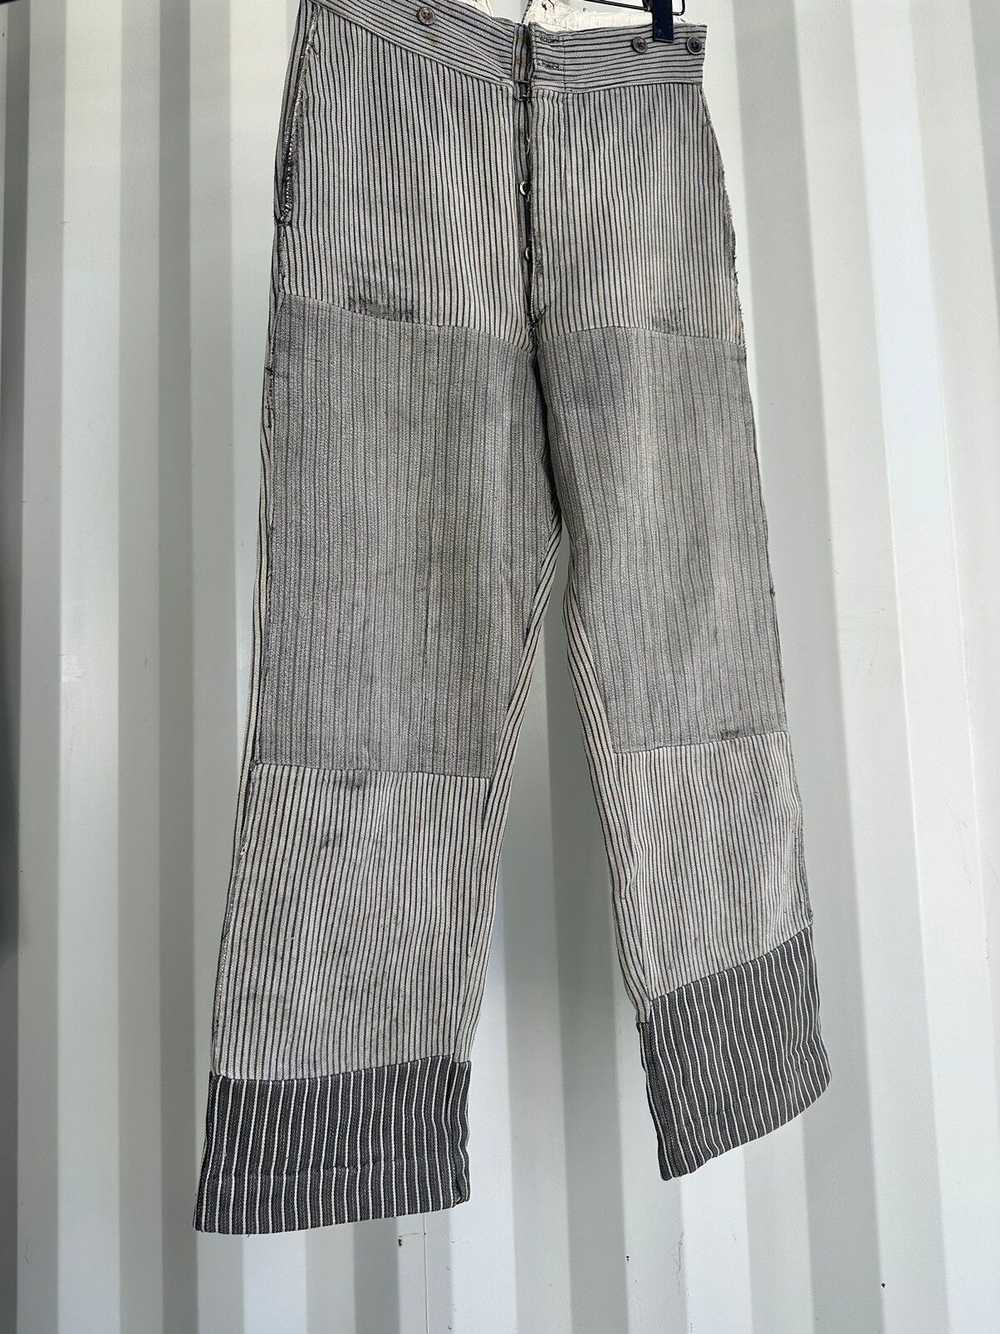 Vintage 20’s French Workwear Chore Pants - image 3